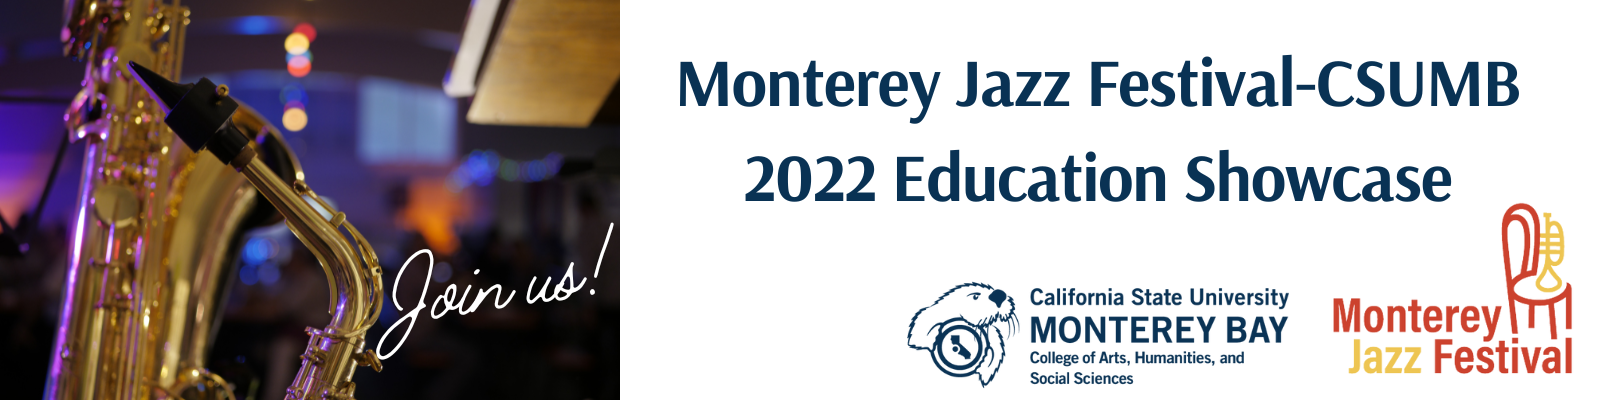 Monterey Jazz Festival CSUMB 2022 Education Showcase Join us!